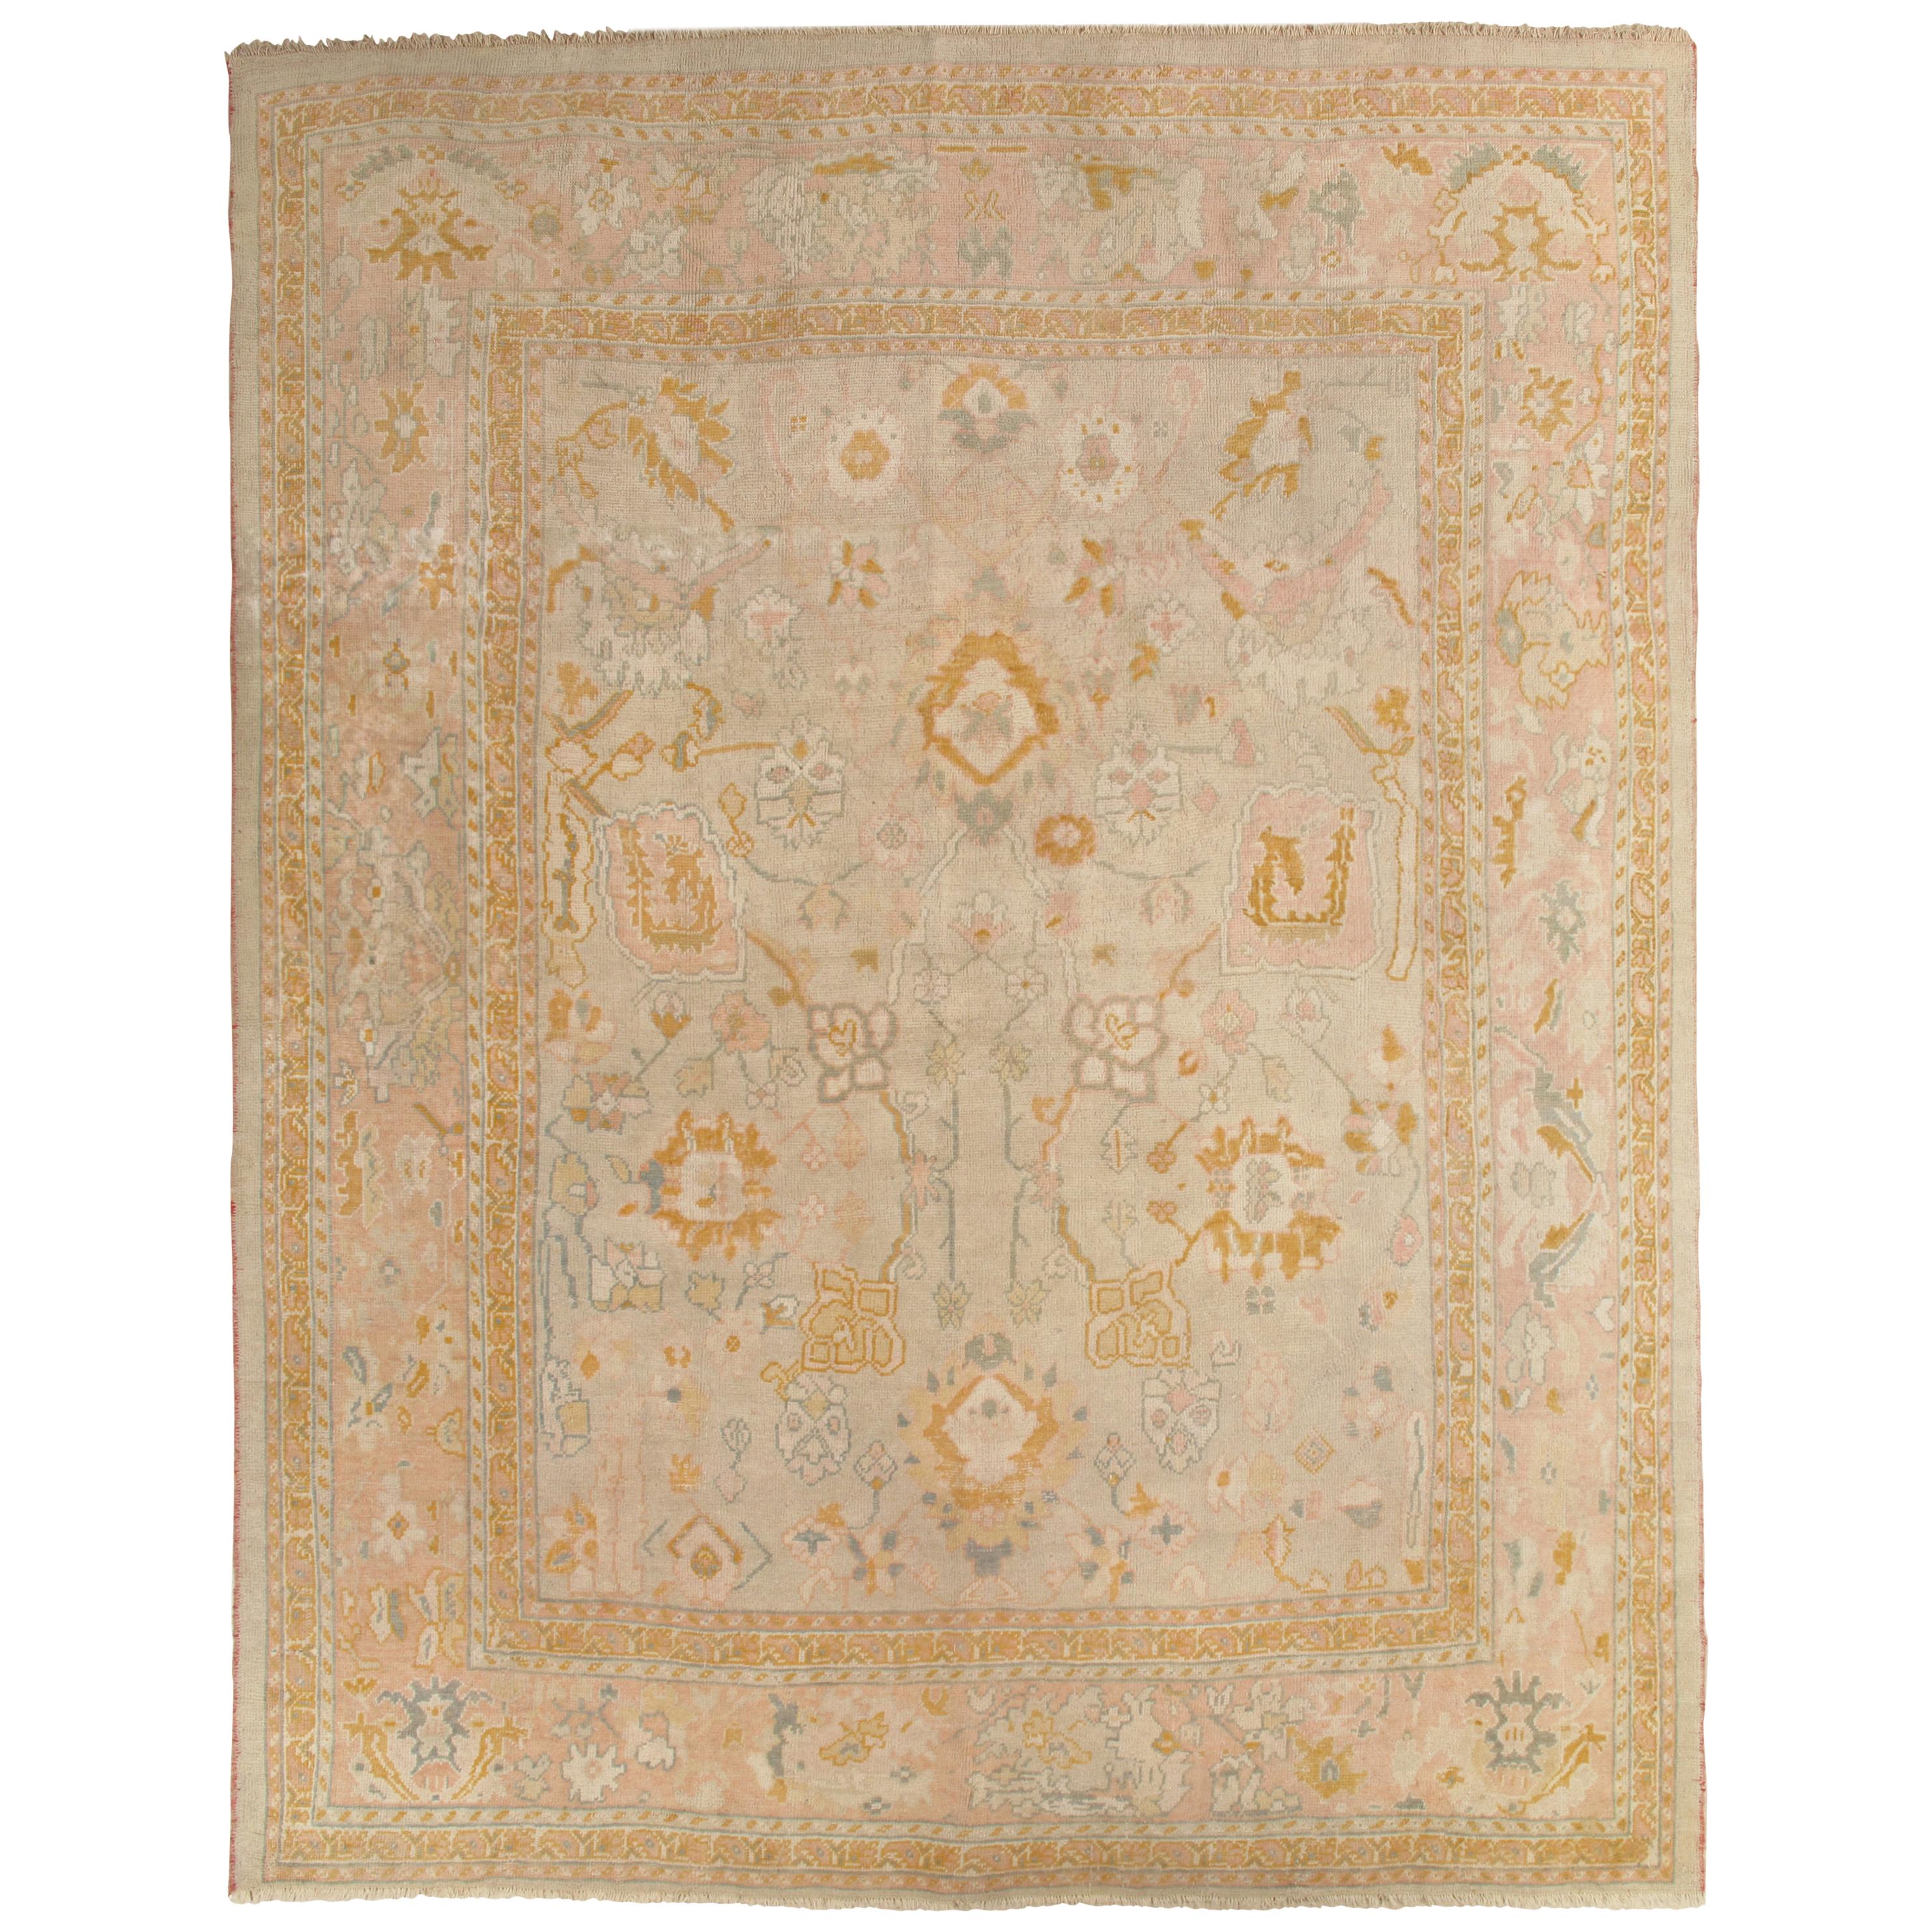 Antique Oushak Carpet, Handmade Turkish Oriental Rug, Beige, Taupe, Soft Shrimp